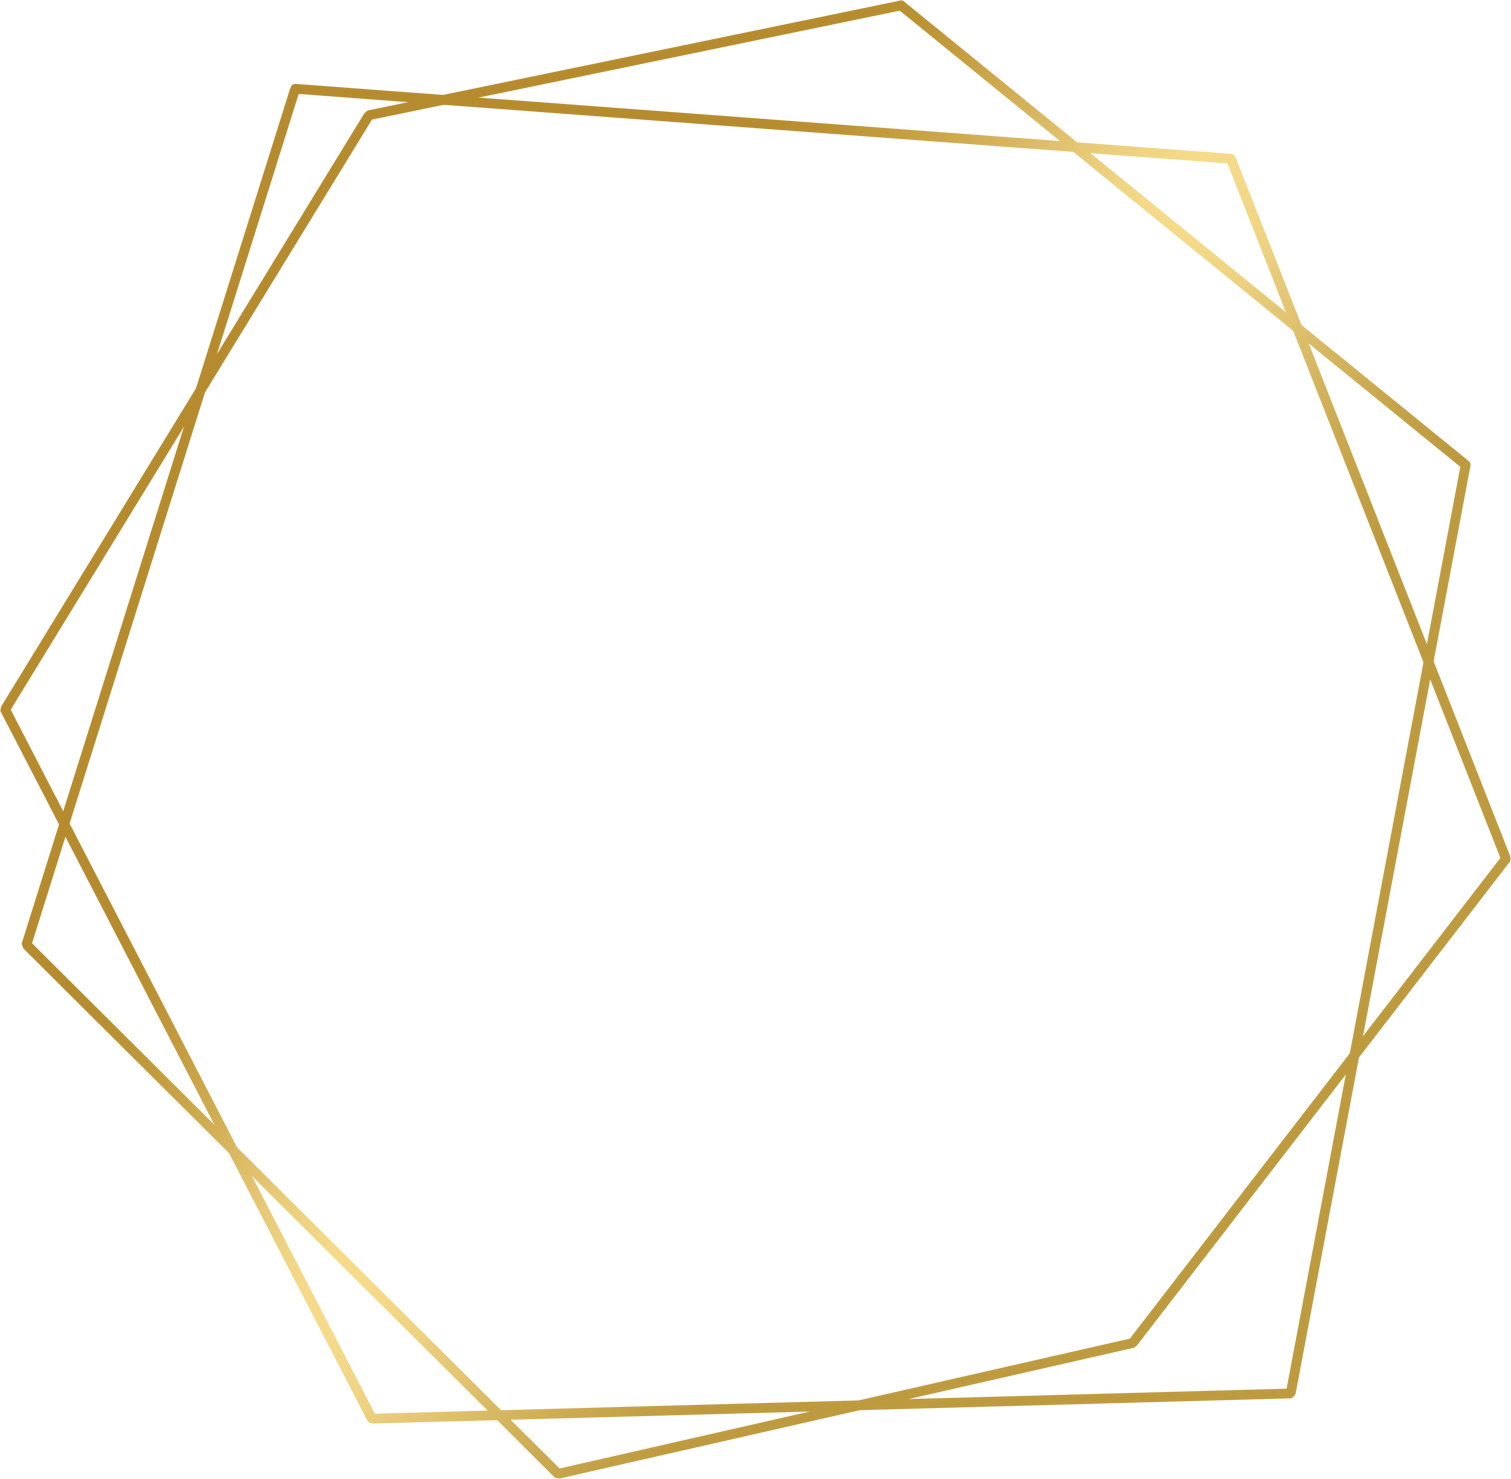 Gold Polygon Border Frame Wedding Hexagon Minimal Geometric